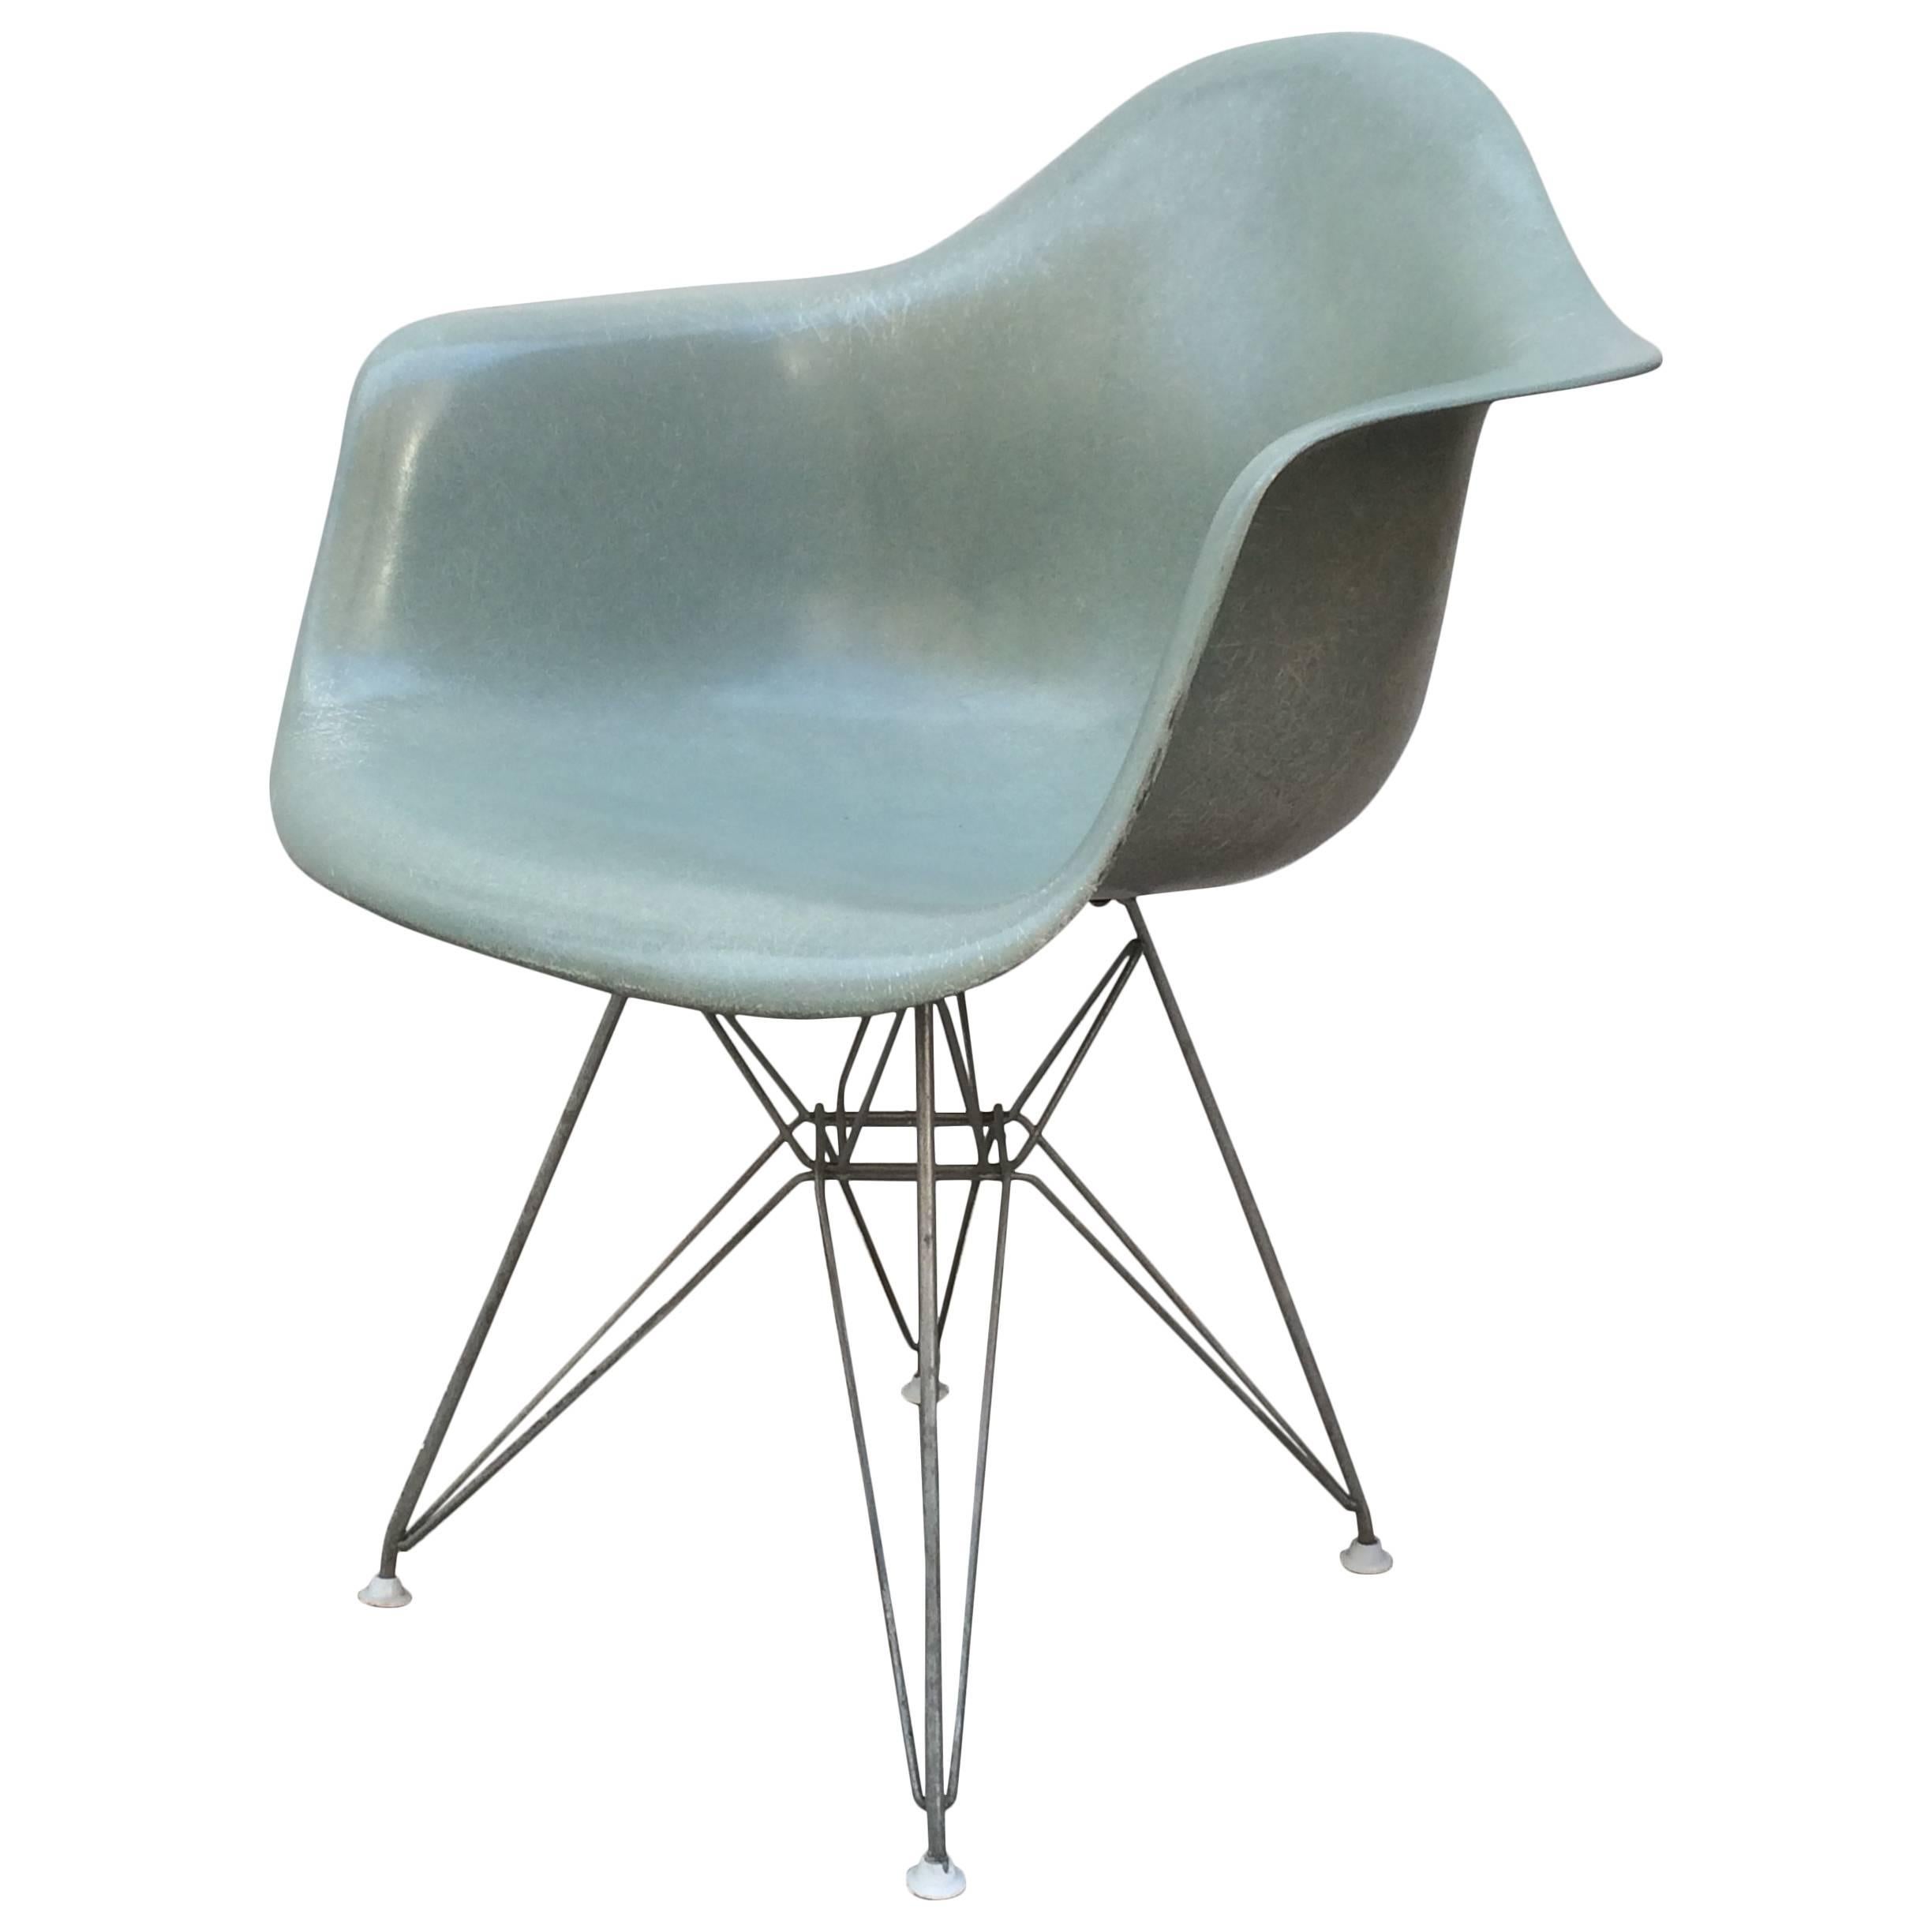 Near Mint Herman Miller Eames Seafoam Green DAR Chair